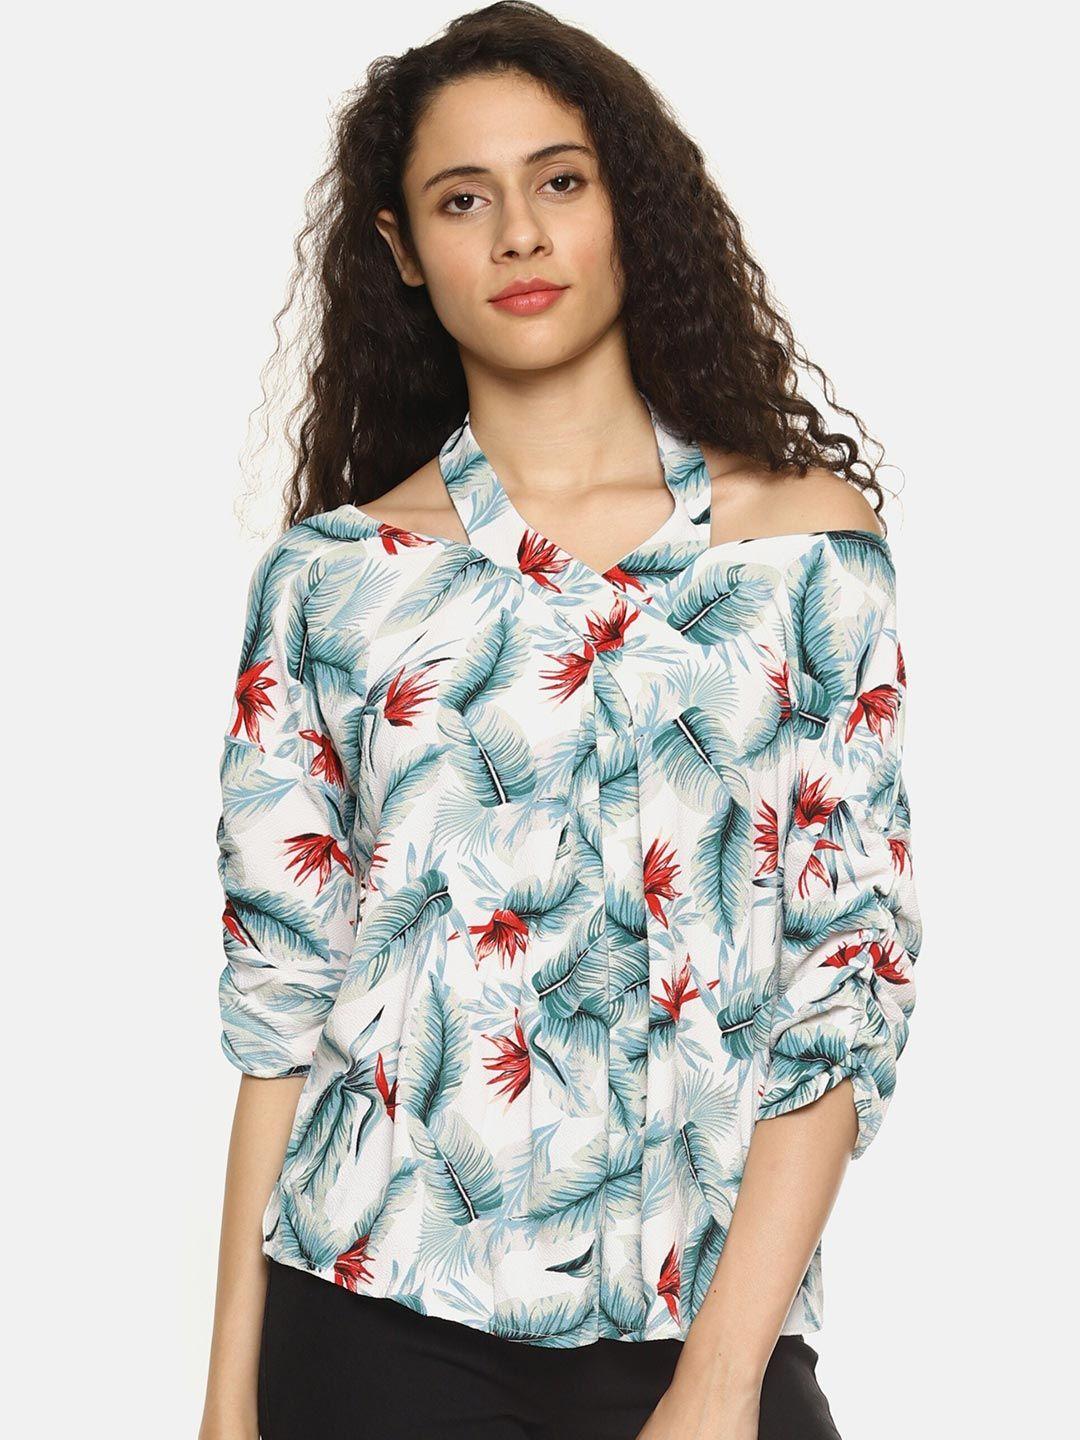 sahora off women floral print halter neck tropical crepe shirt style top